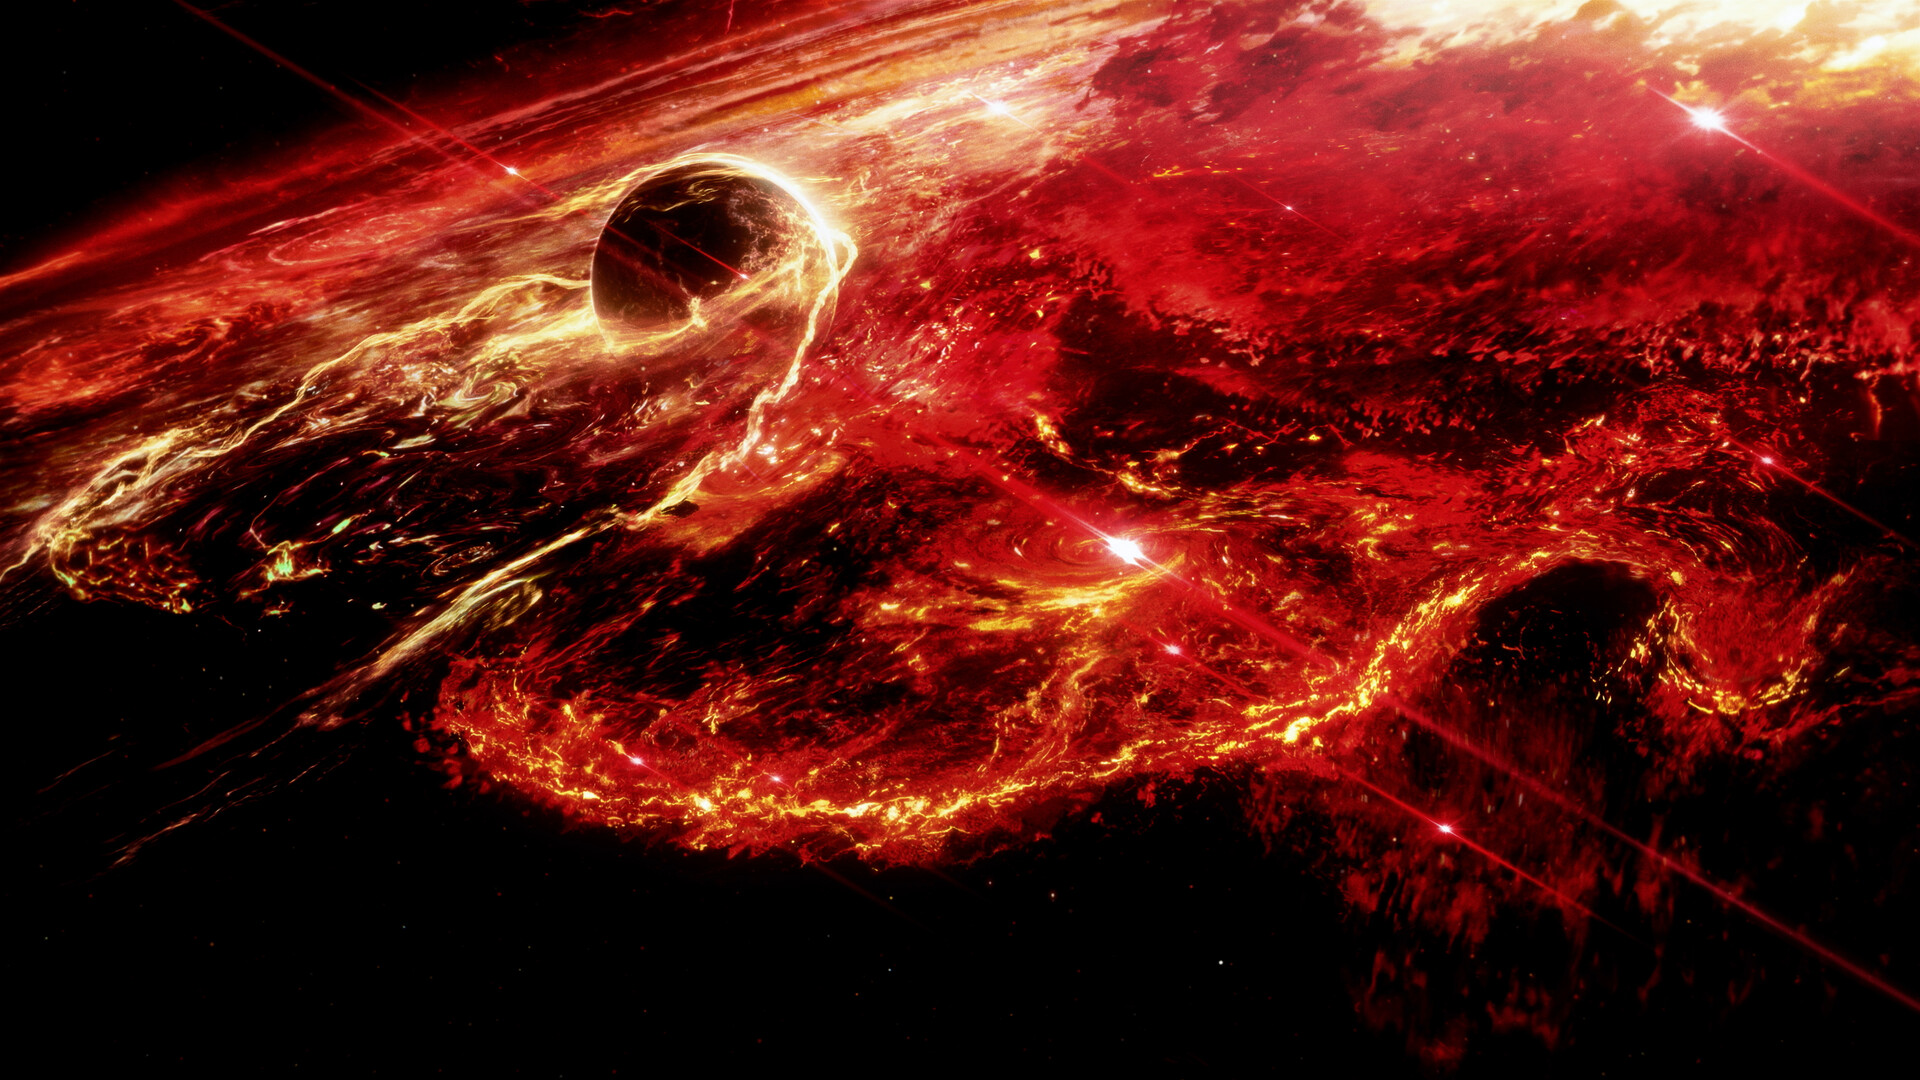 Ar ядро 6 языков пламени захватывают галактику